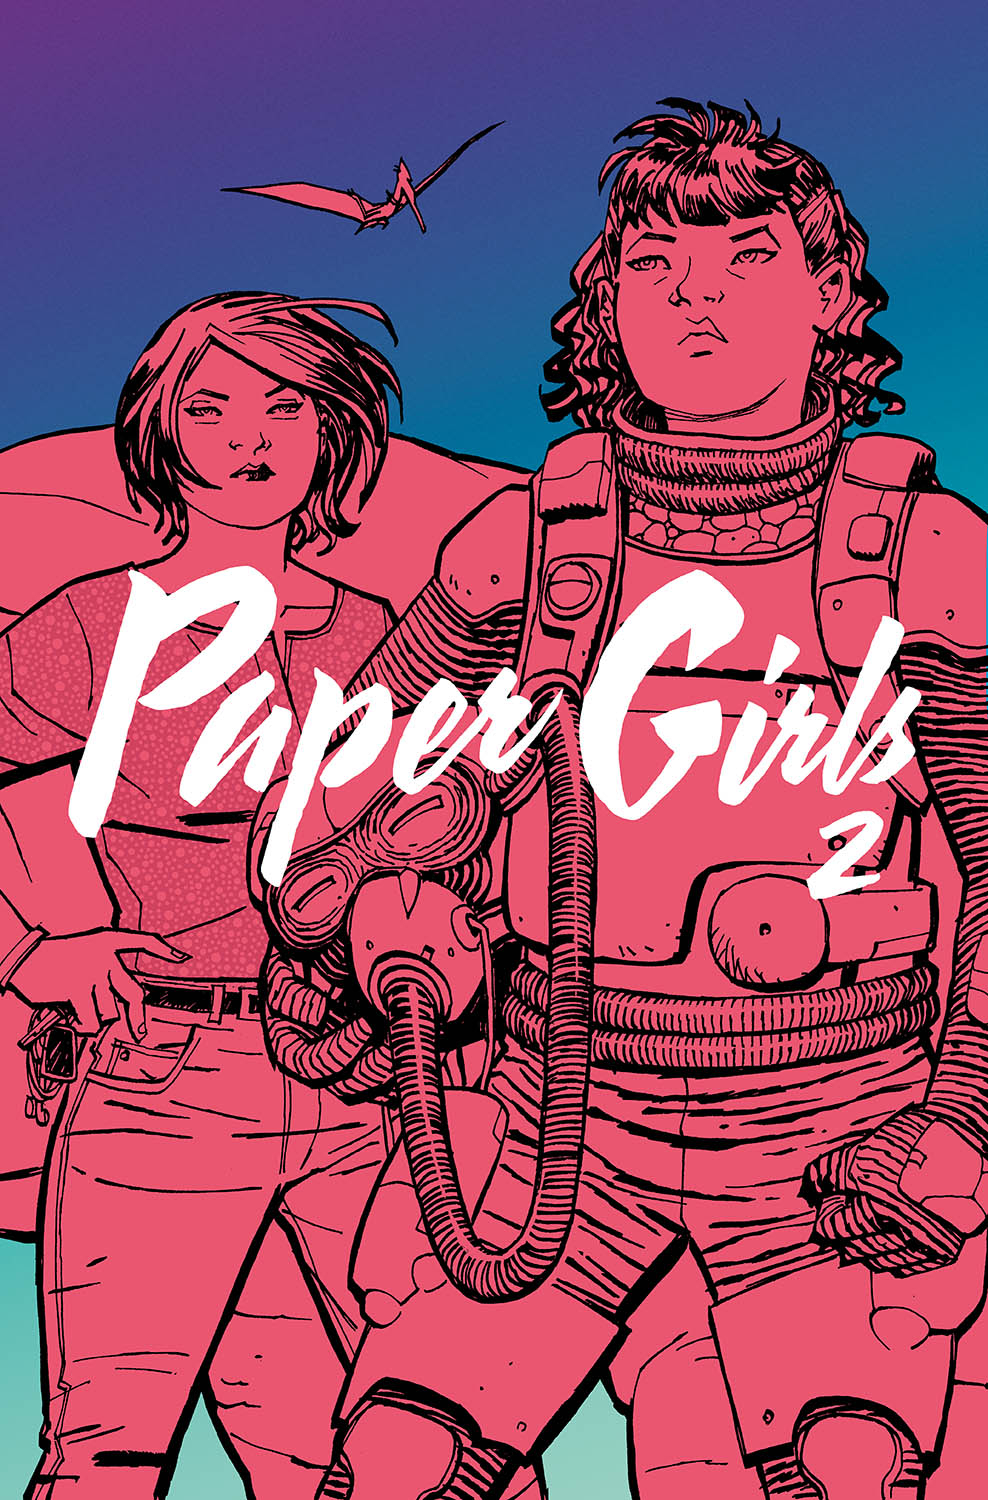 Paper Girls Graphic Novel Volume 2